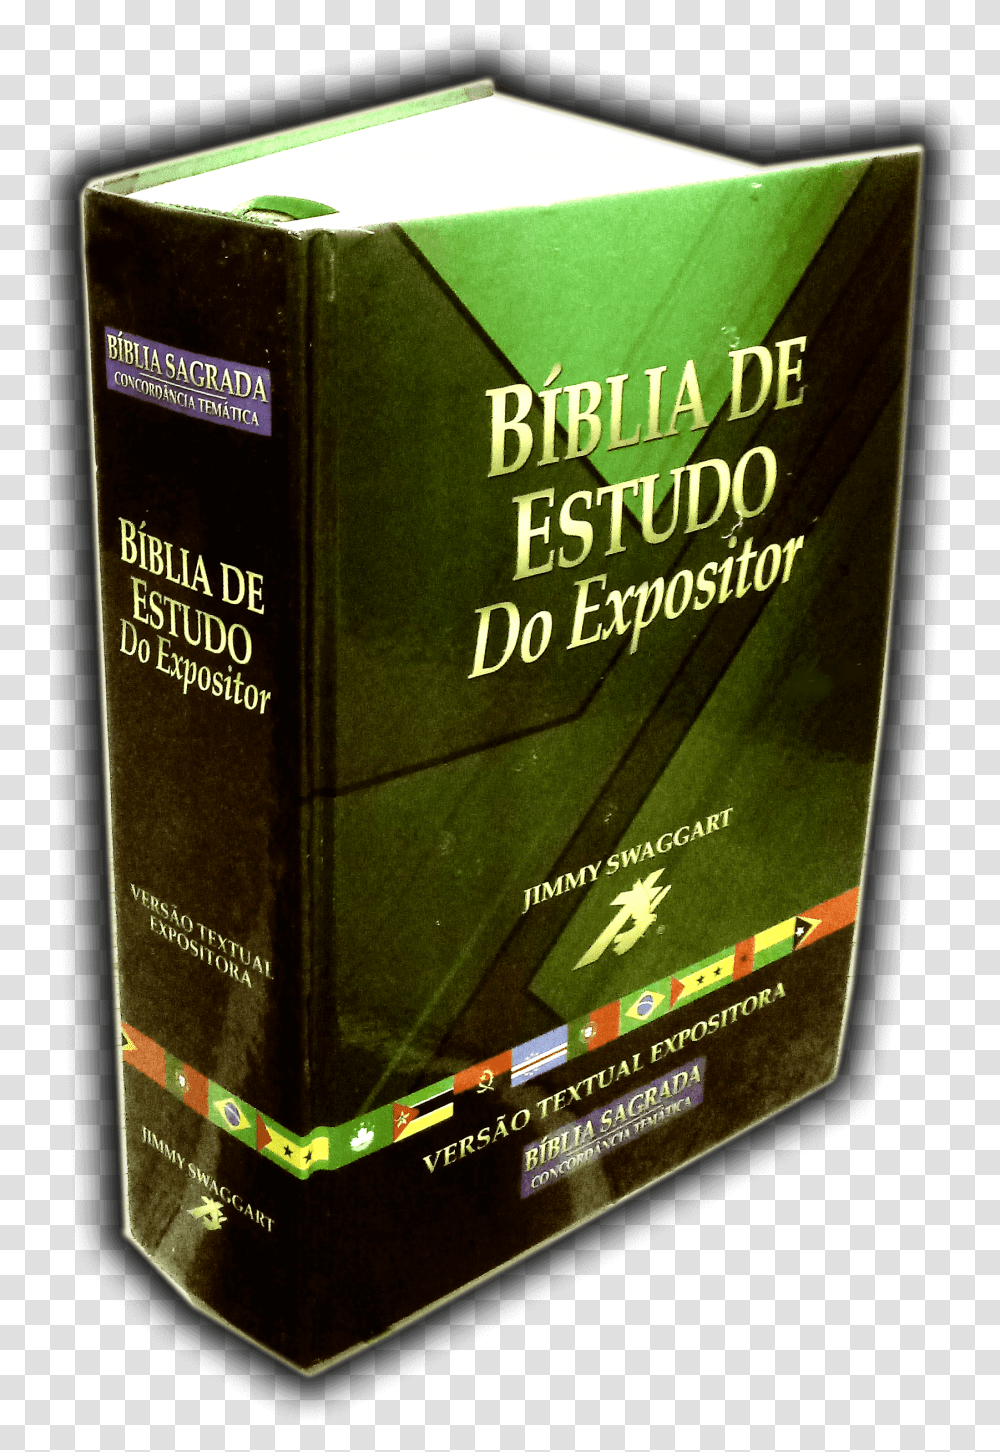 Bblia De Estudo Do Expositor, Book, Bottle, Jar, Flyer Transparent Png